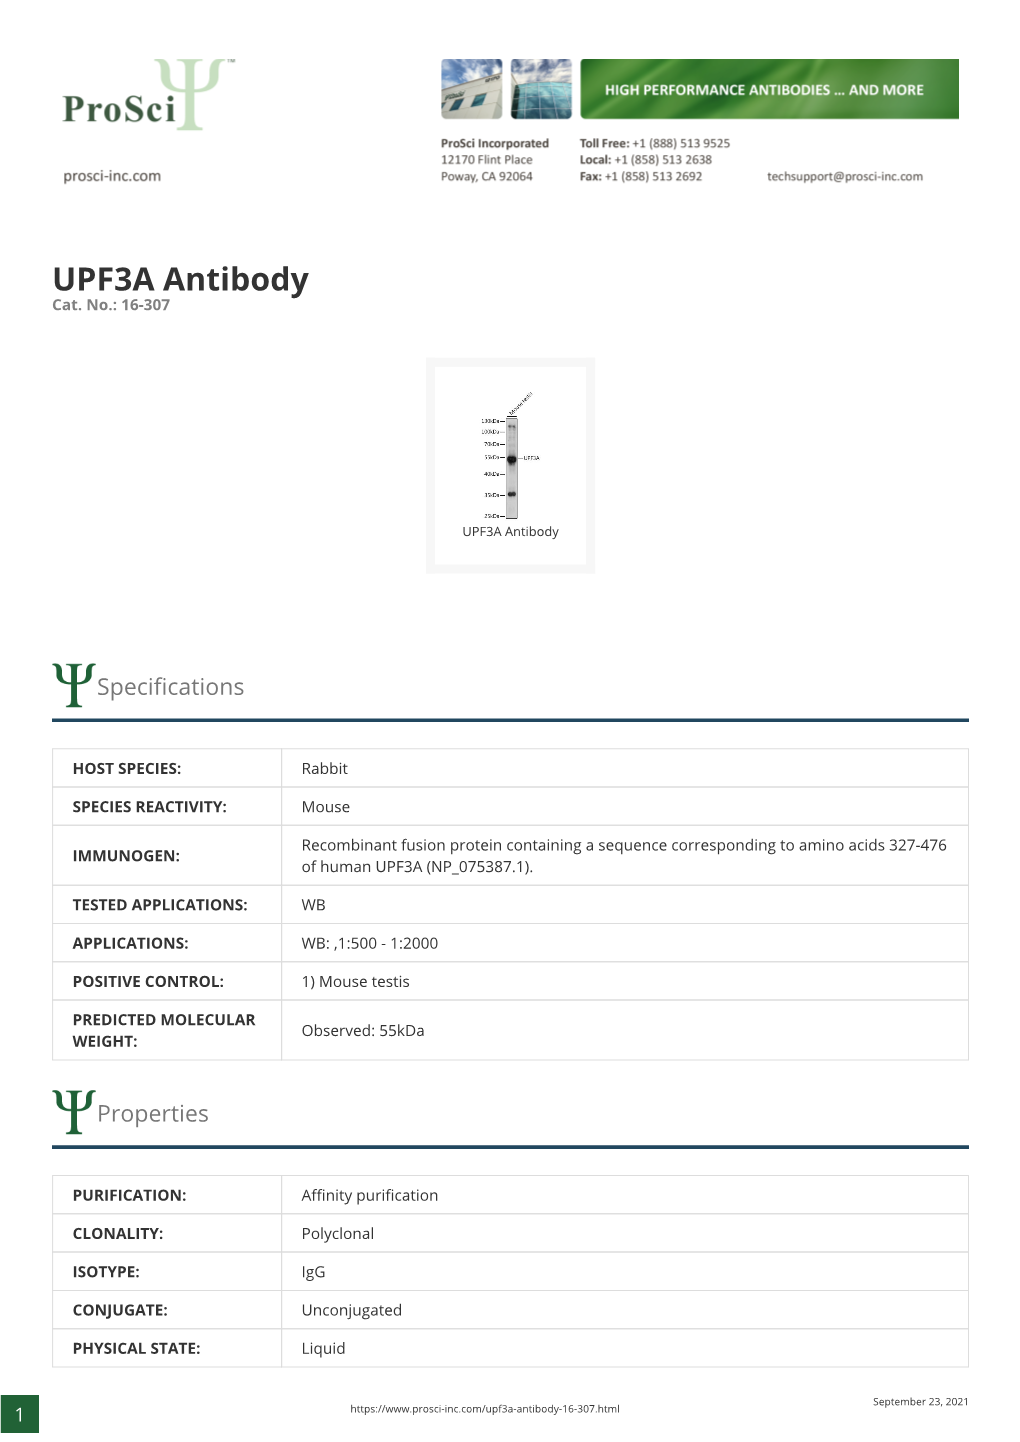 UPF3A Antibody Cat